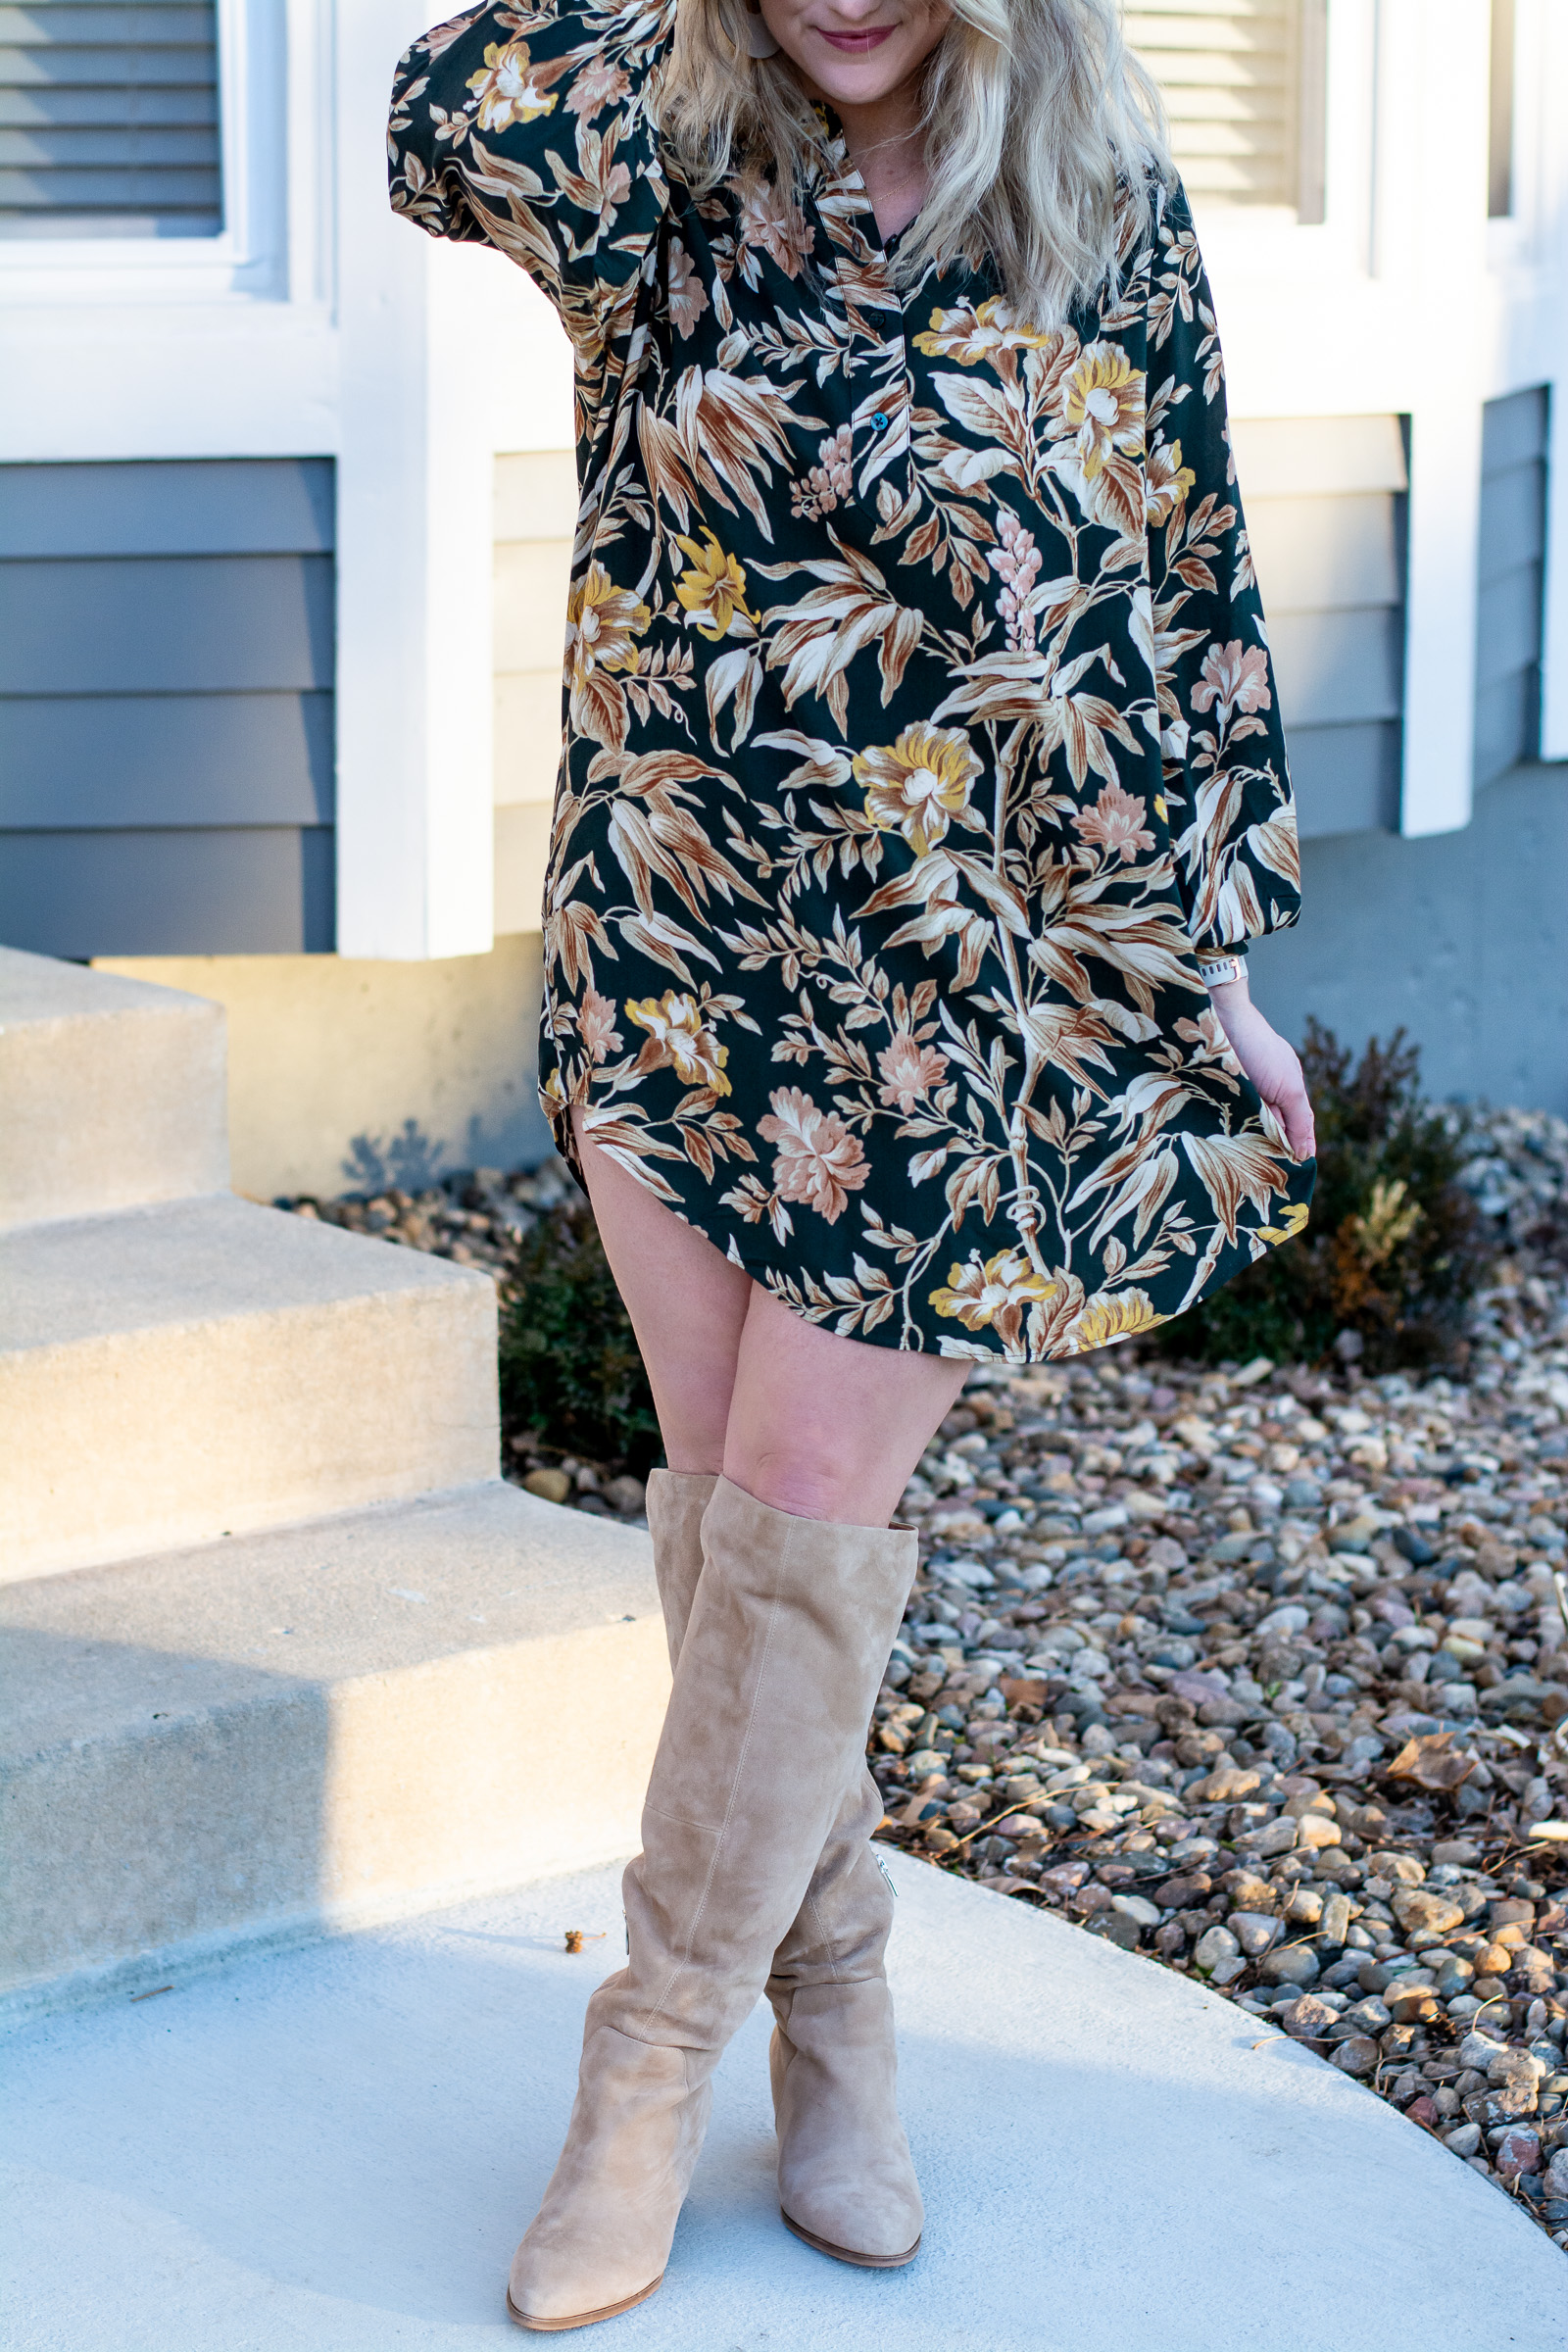 Winter Floral Dress + Tan Boots. | LSR